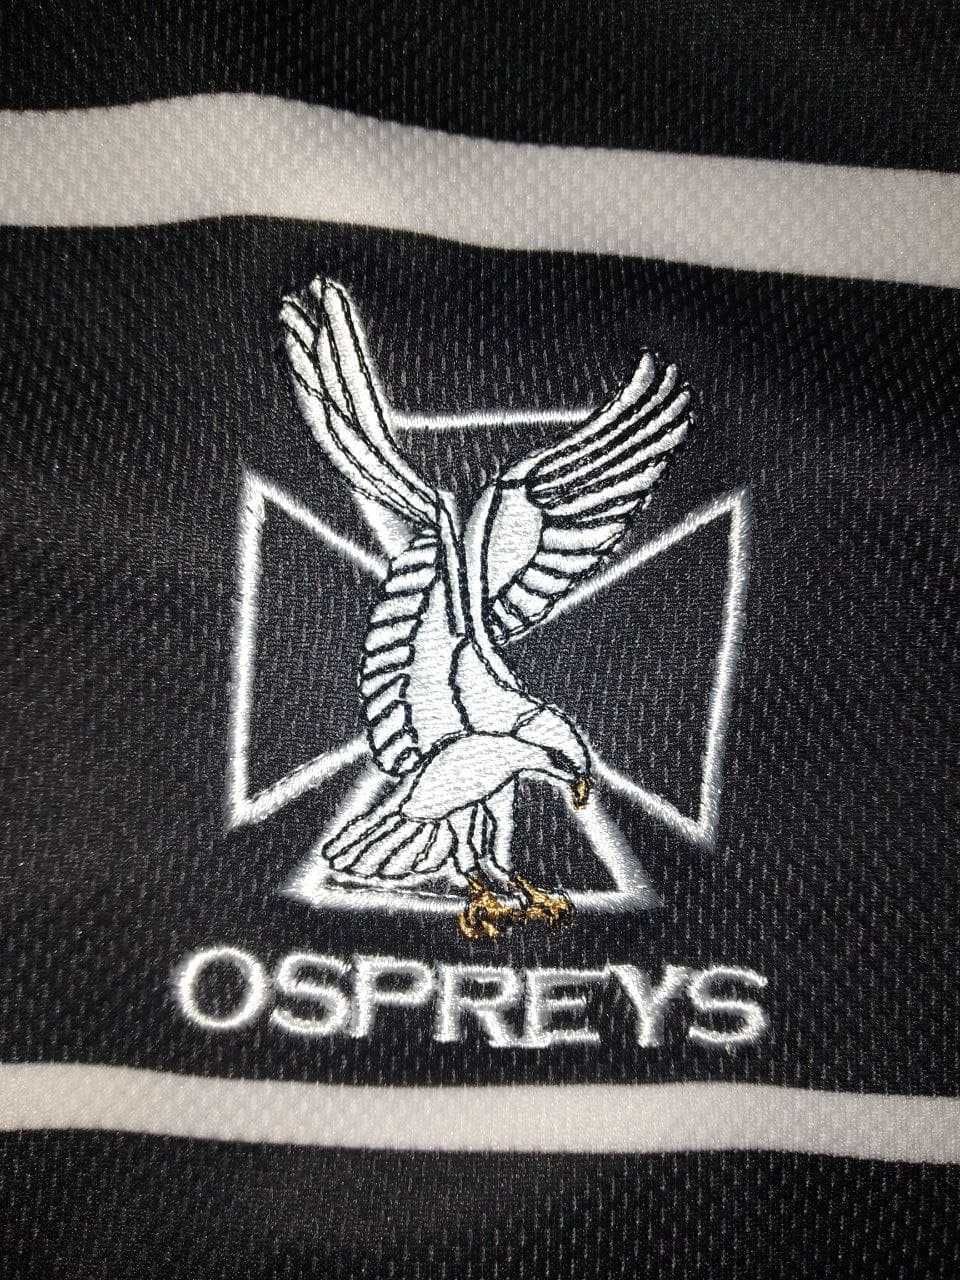 Футболка регбийная, джерси Оcпрейз KooGa (Ospreys) Rugby 2006